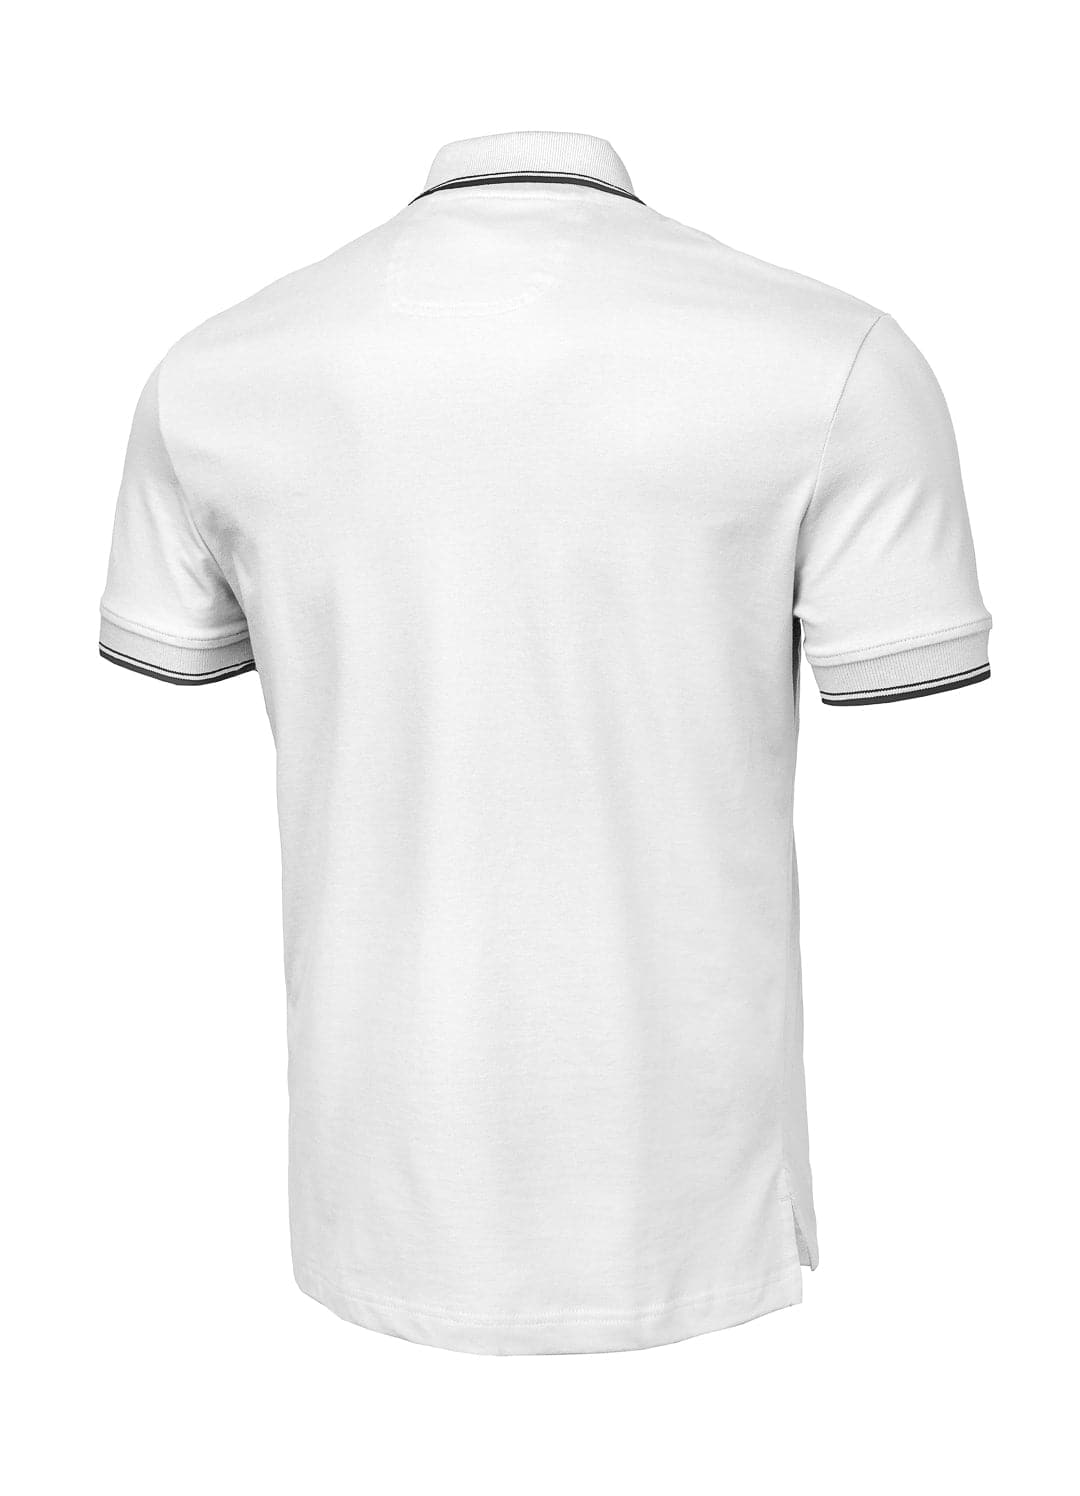 POLO REGULAR STRIPES Spandex White T-shirt.